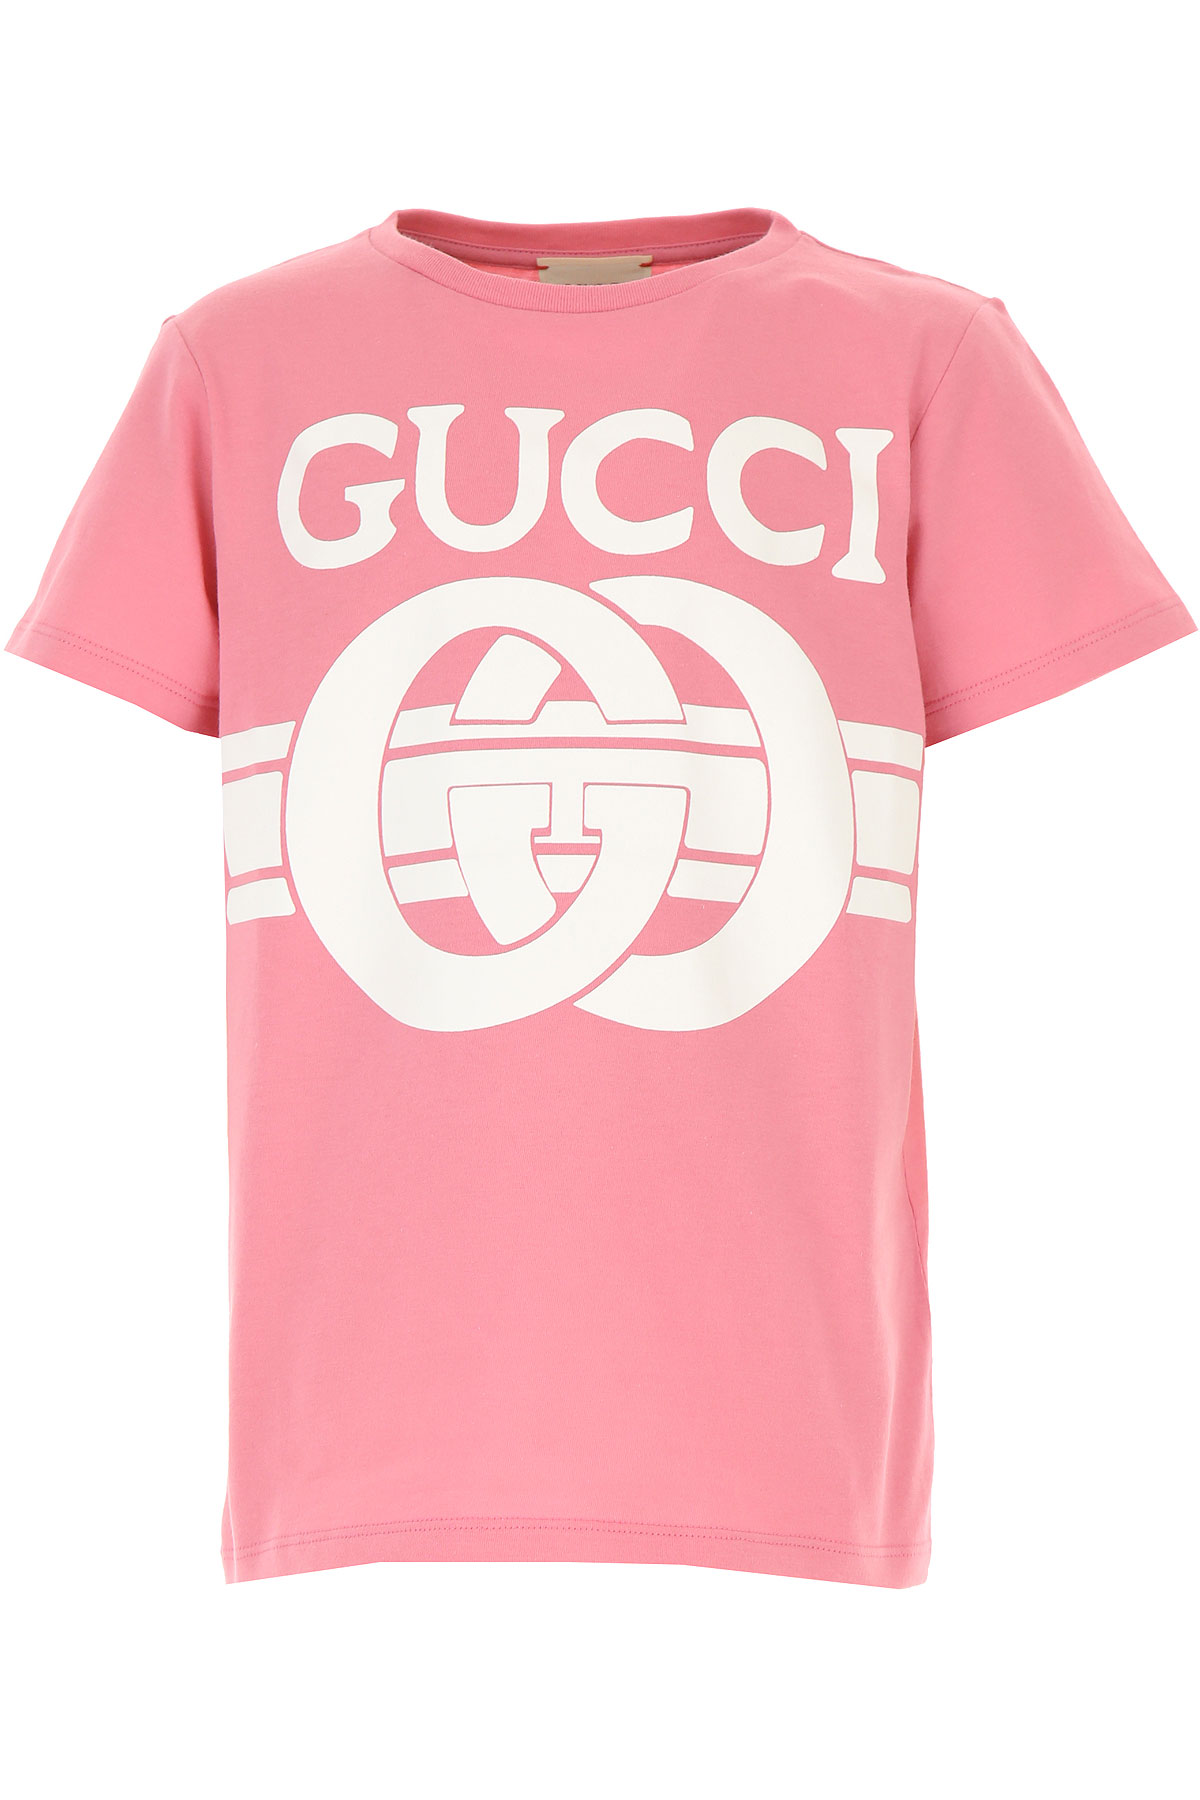 Girls Clothing Gucci, Style code: 547559-xjahv-5544